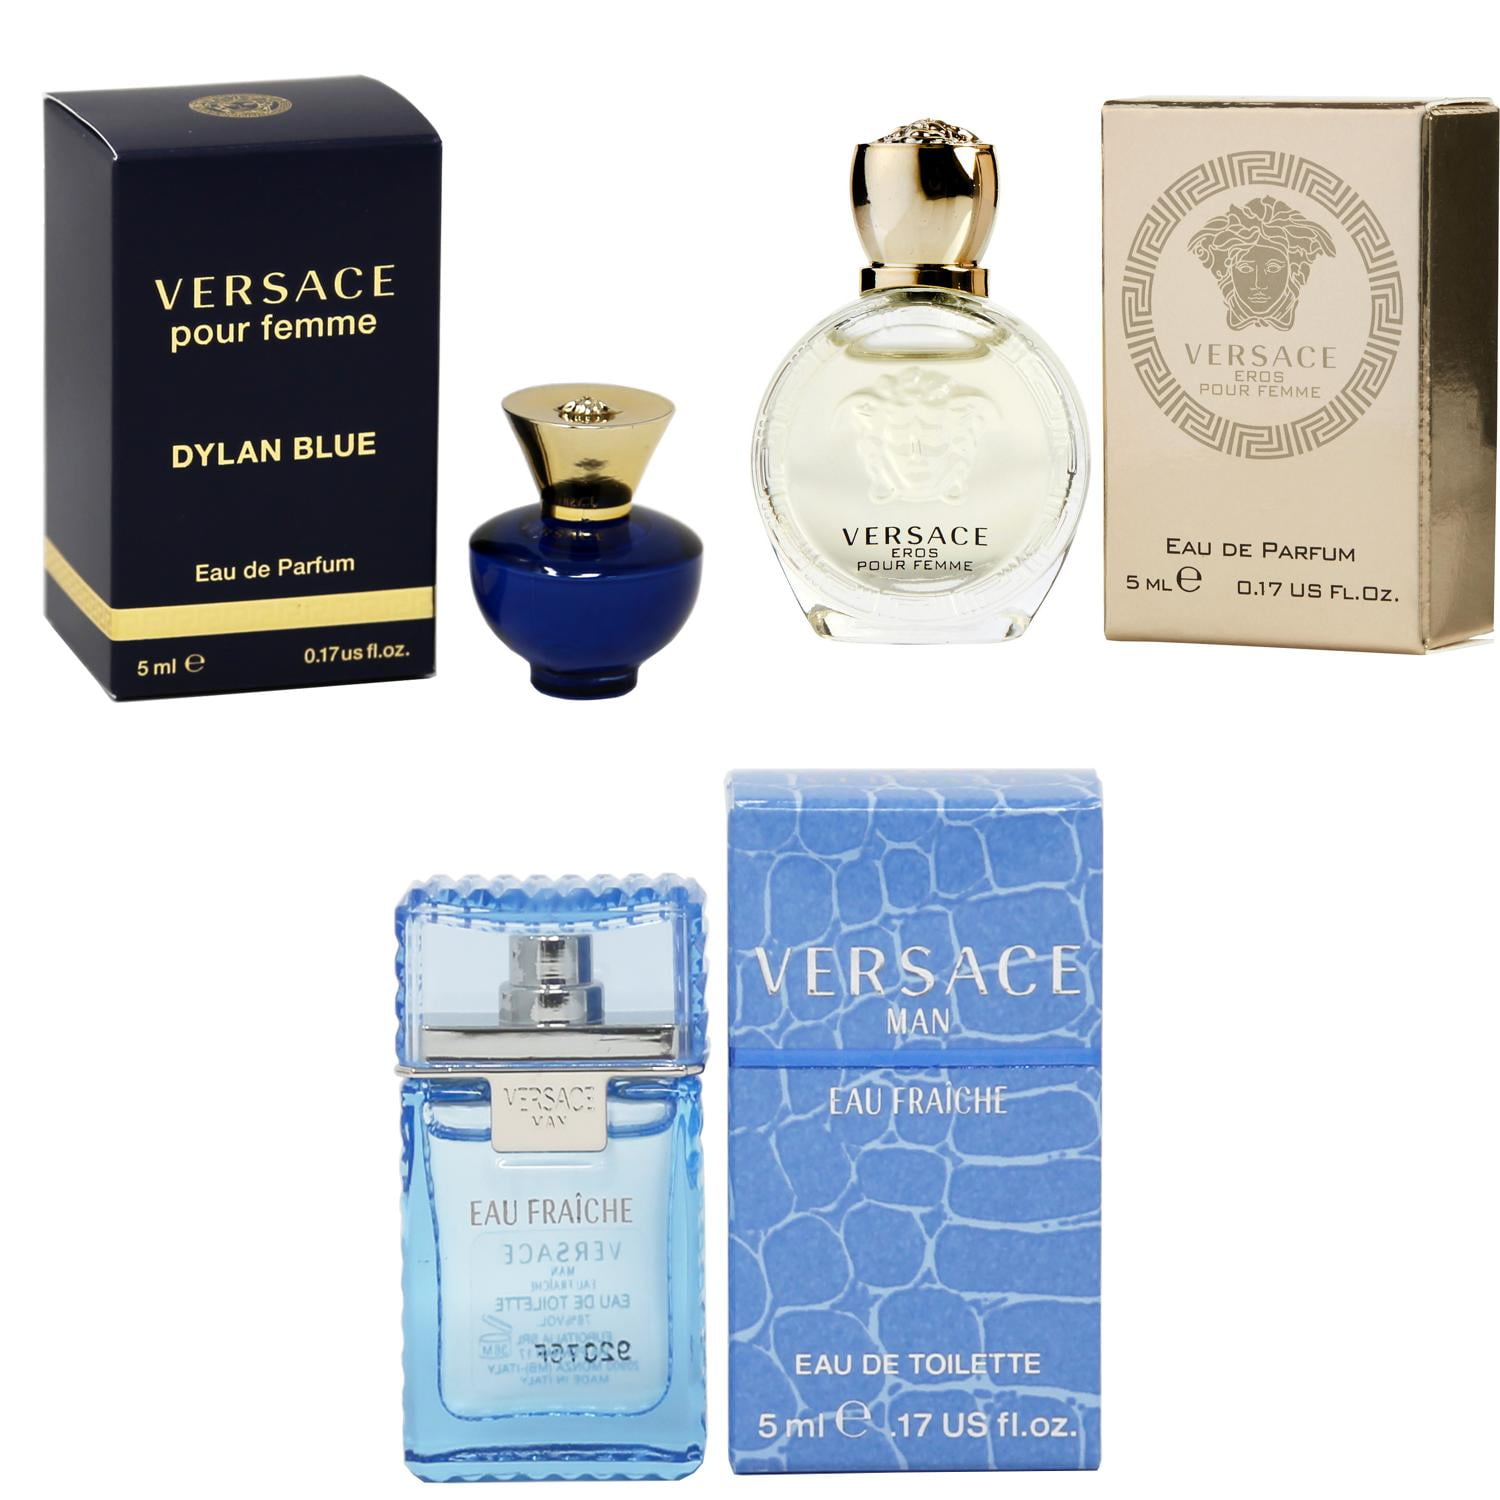  Versace Eros 3 Piece Mini Gift Set : Beauty & Personal Care